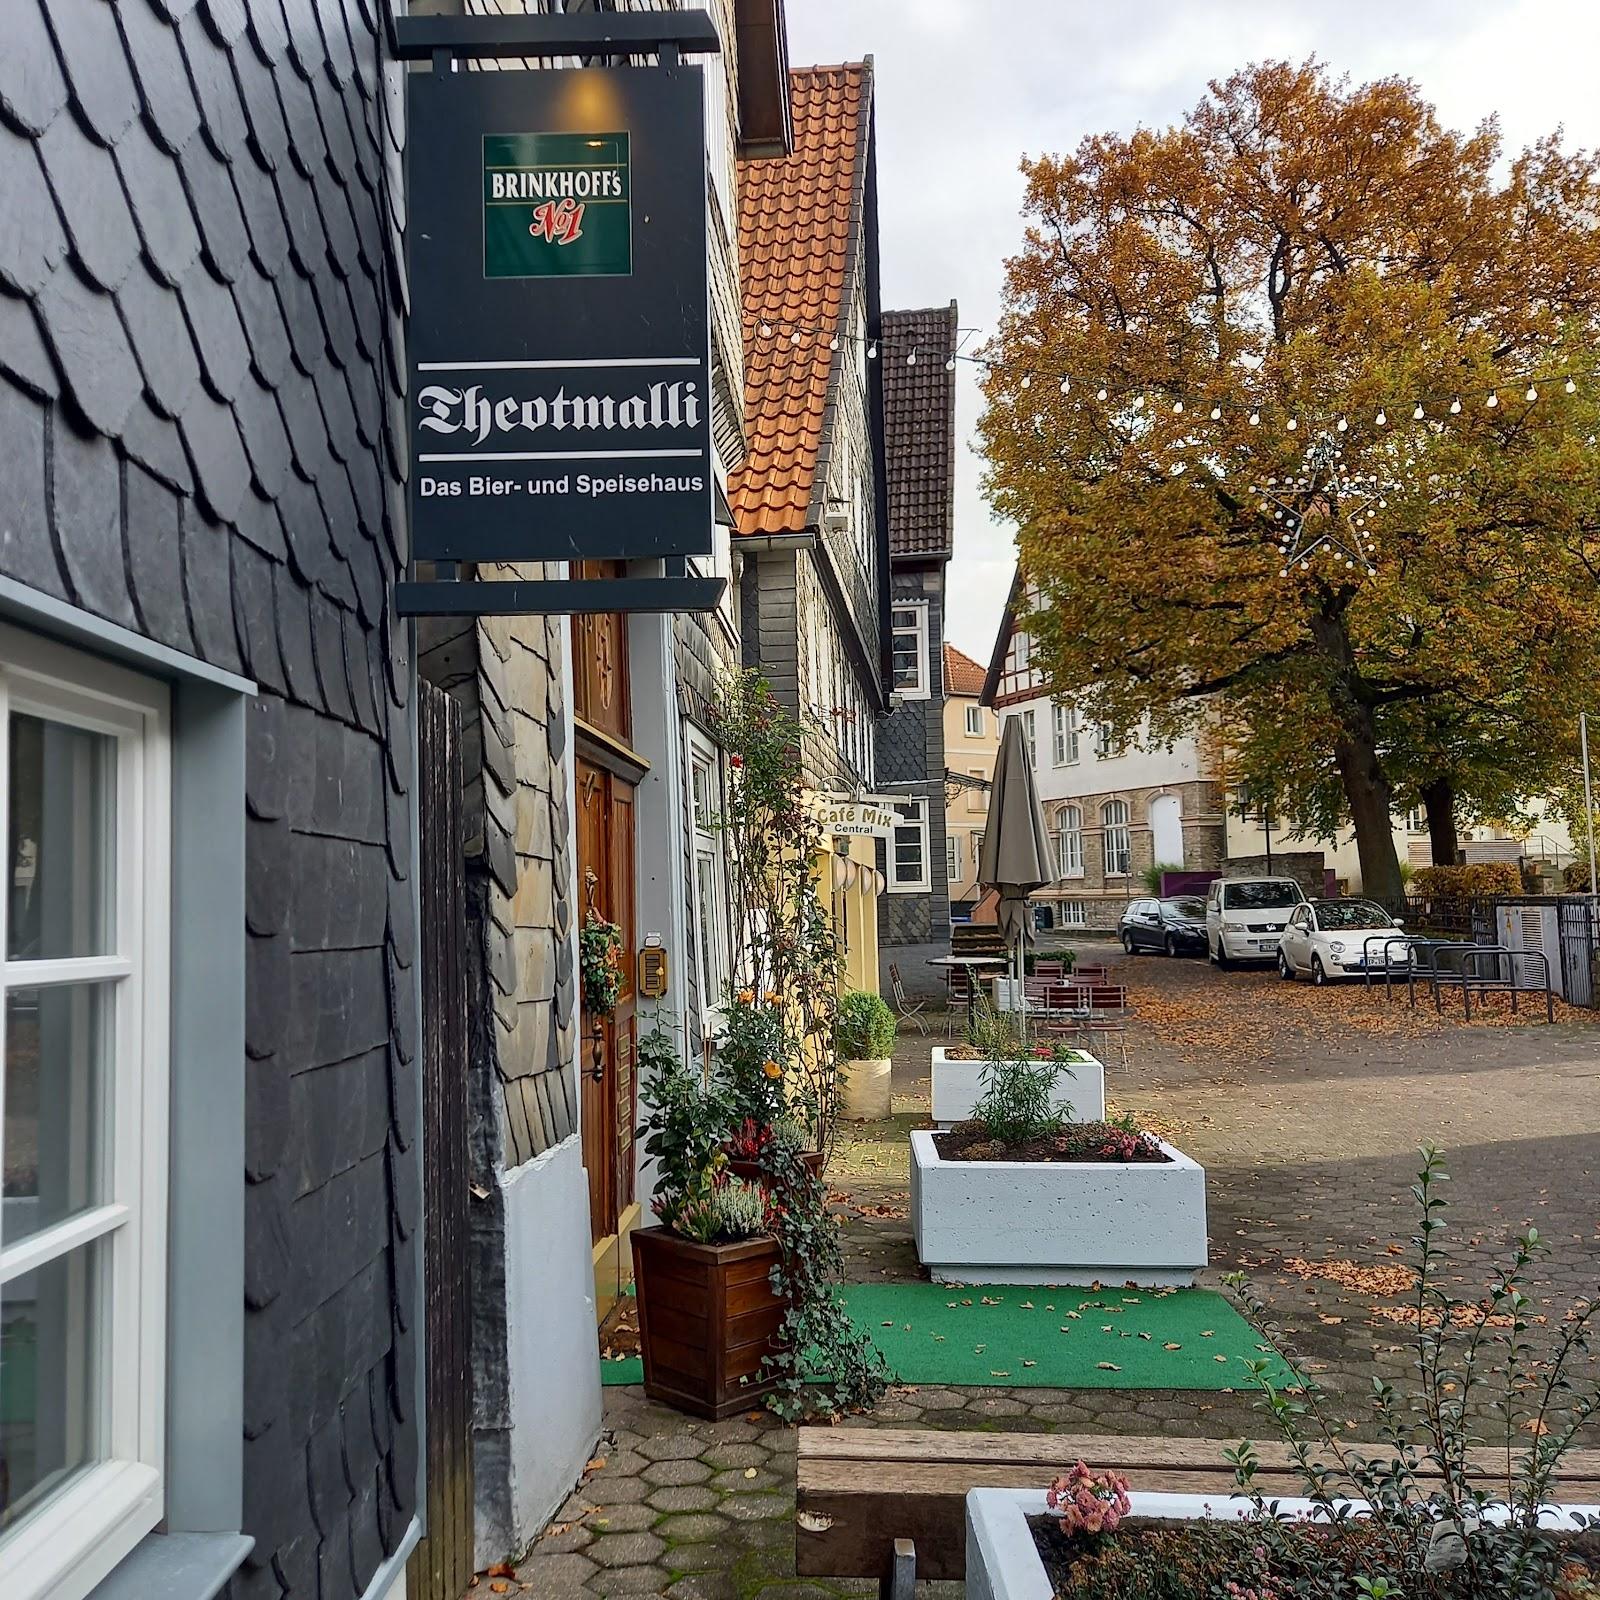 Restaurant "Theotmalli" in Detmold